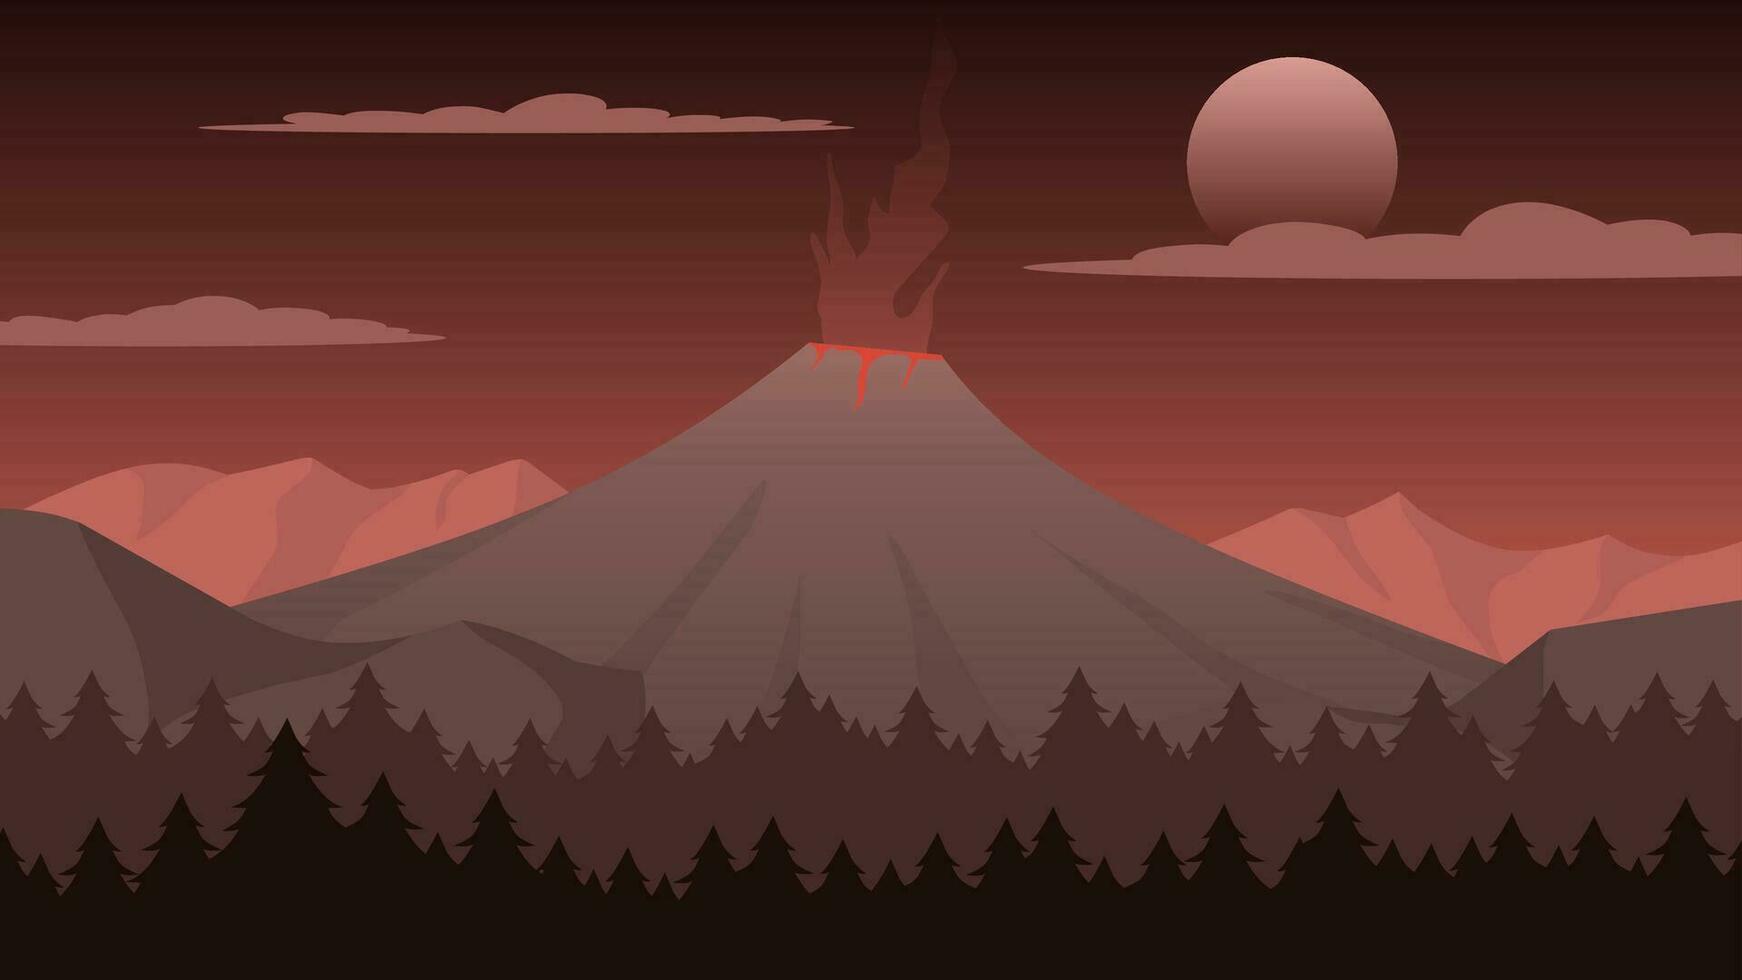 vector ilustración de volcán con fumar erupción. volcán paisaje en el noche. volcánico paisaje para fondo, fondo de pantalla, o aterrizaje página. paisaje naturaleza ilustración con degradado estilo